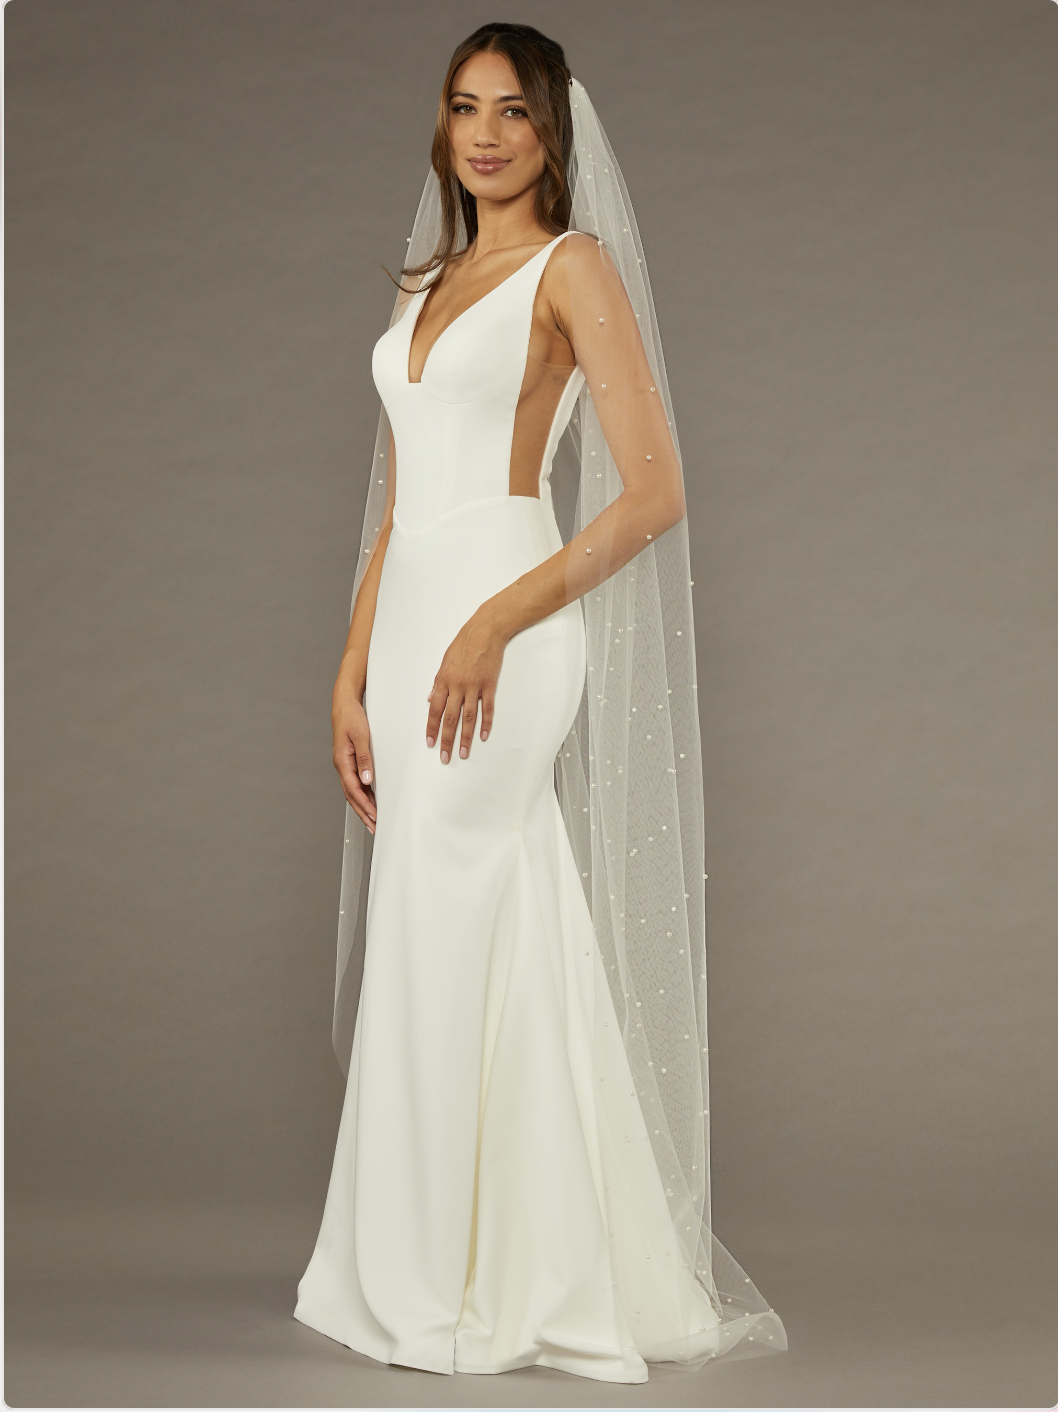 Sleek wedding dress paired with pear veil.